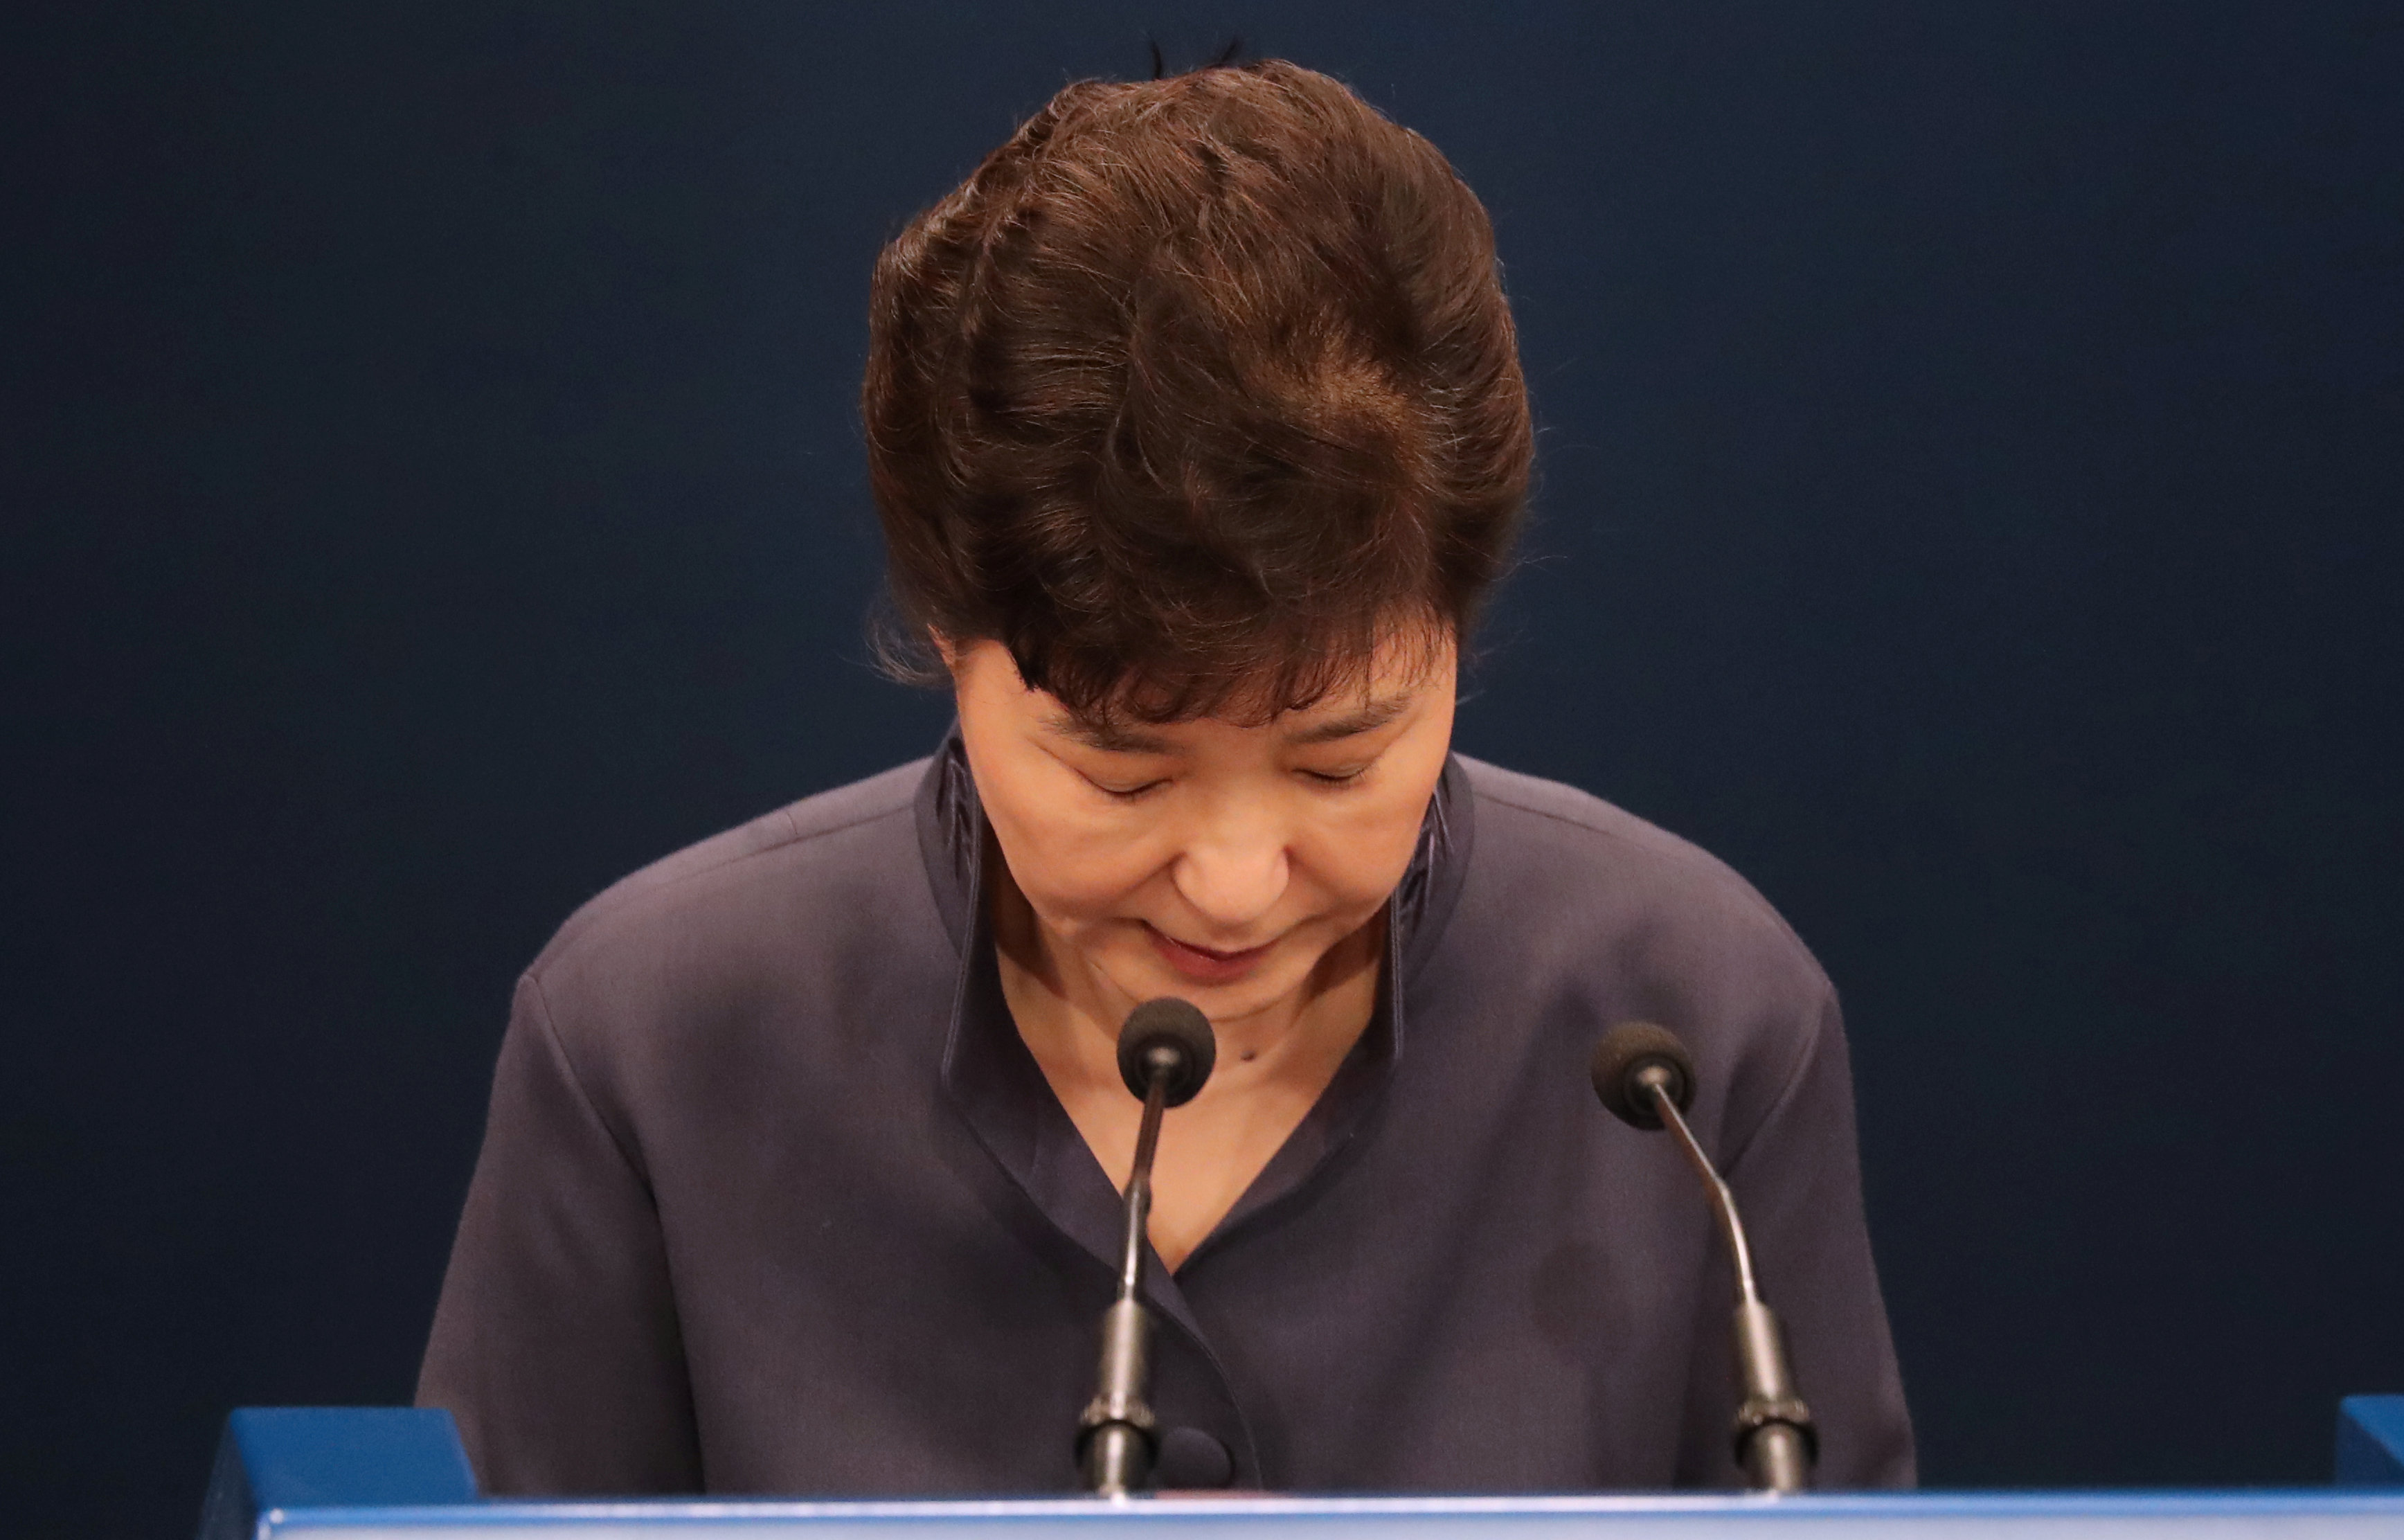 South Korea's President apologises for seeking friend's advice